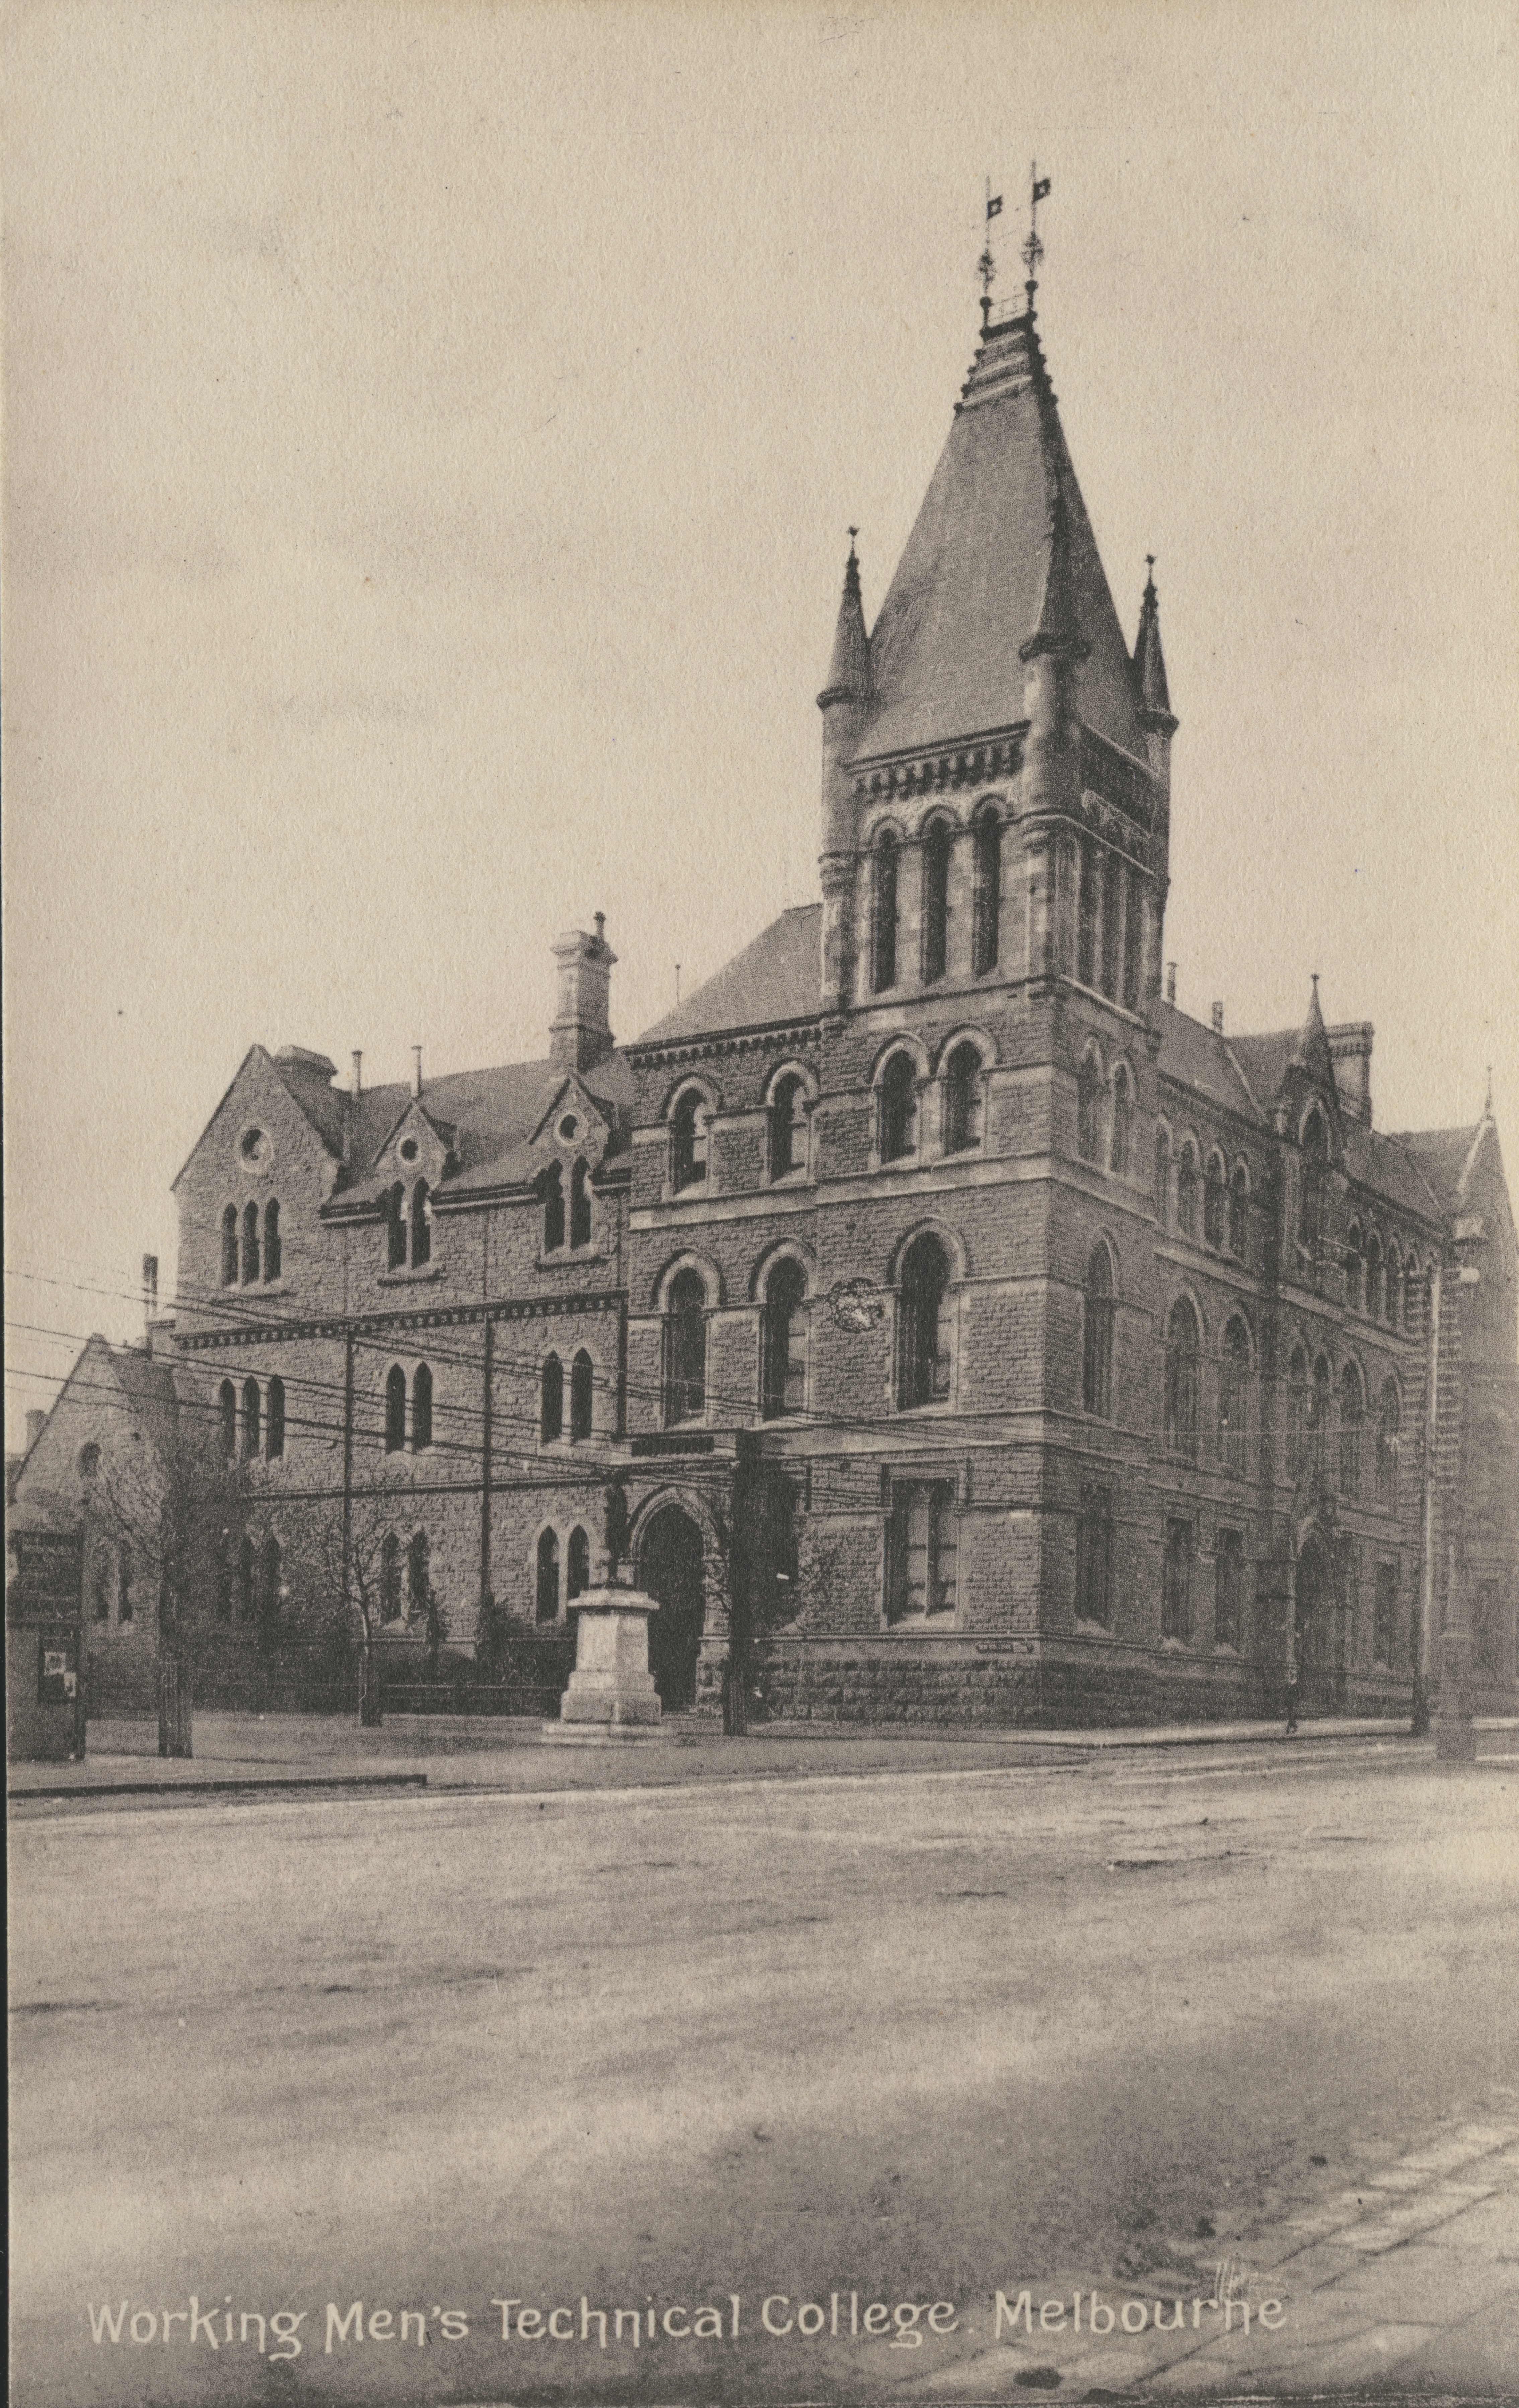 Working Men's Technical College, Melbourne, c1906.